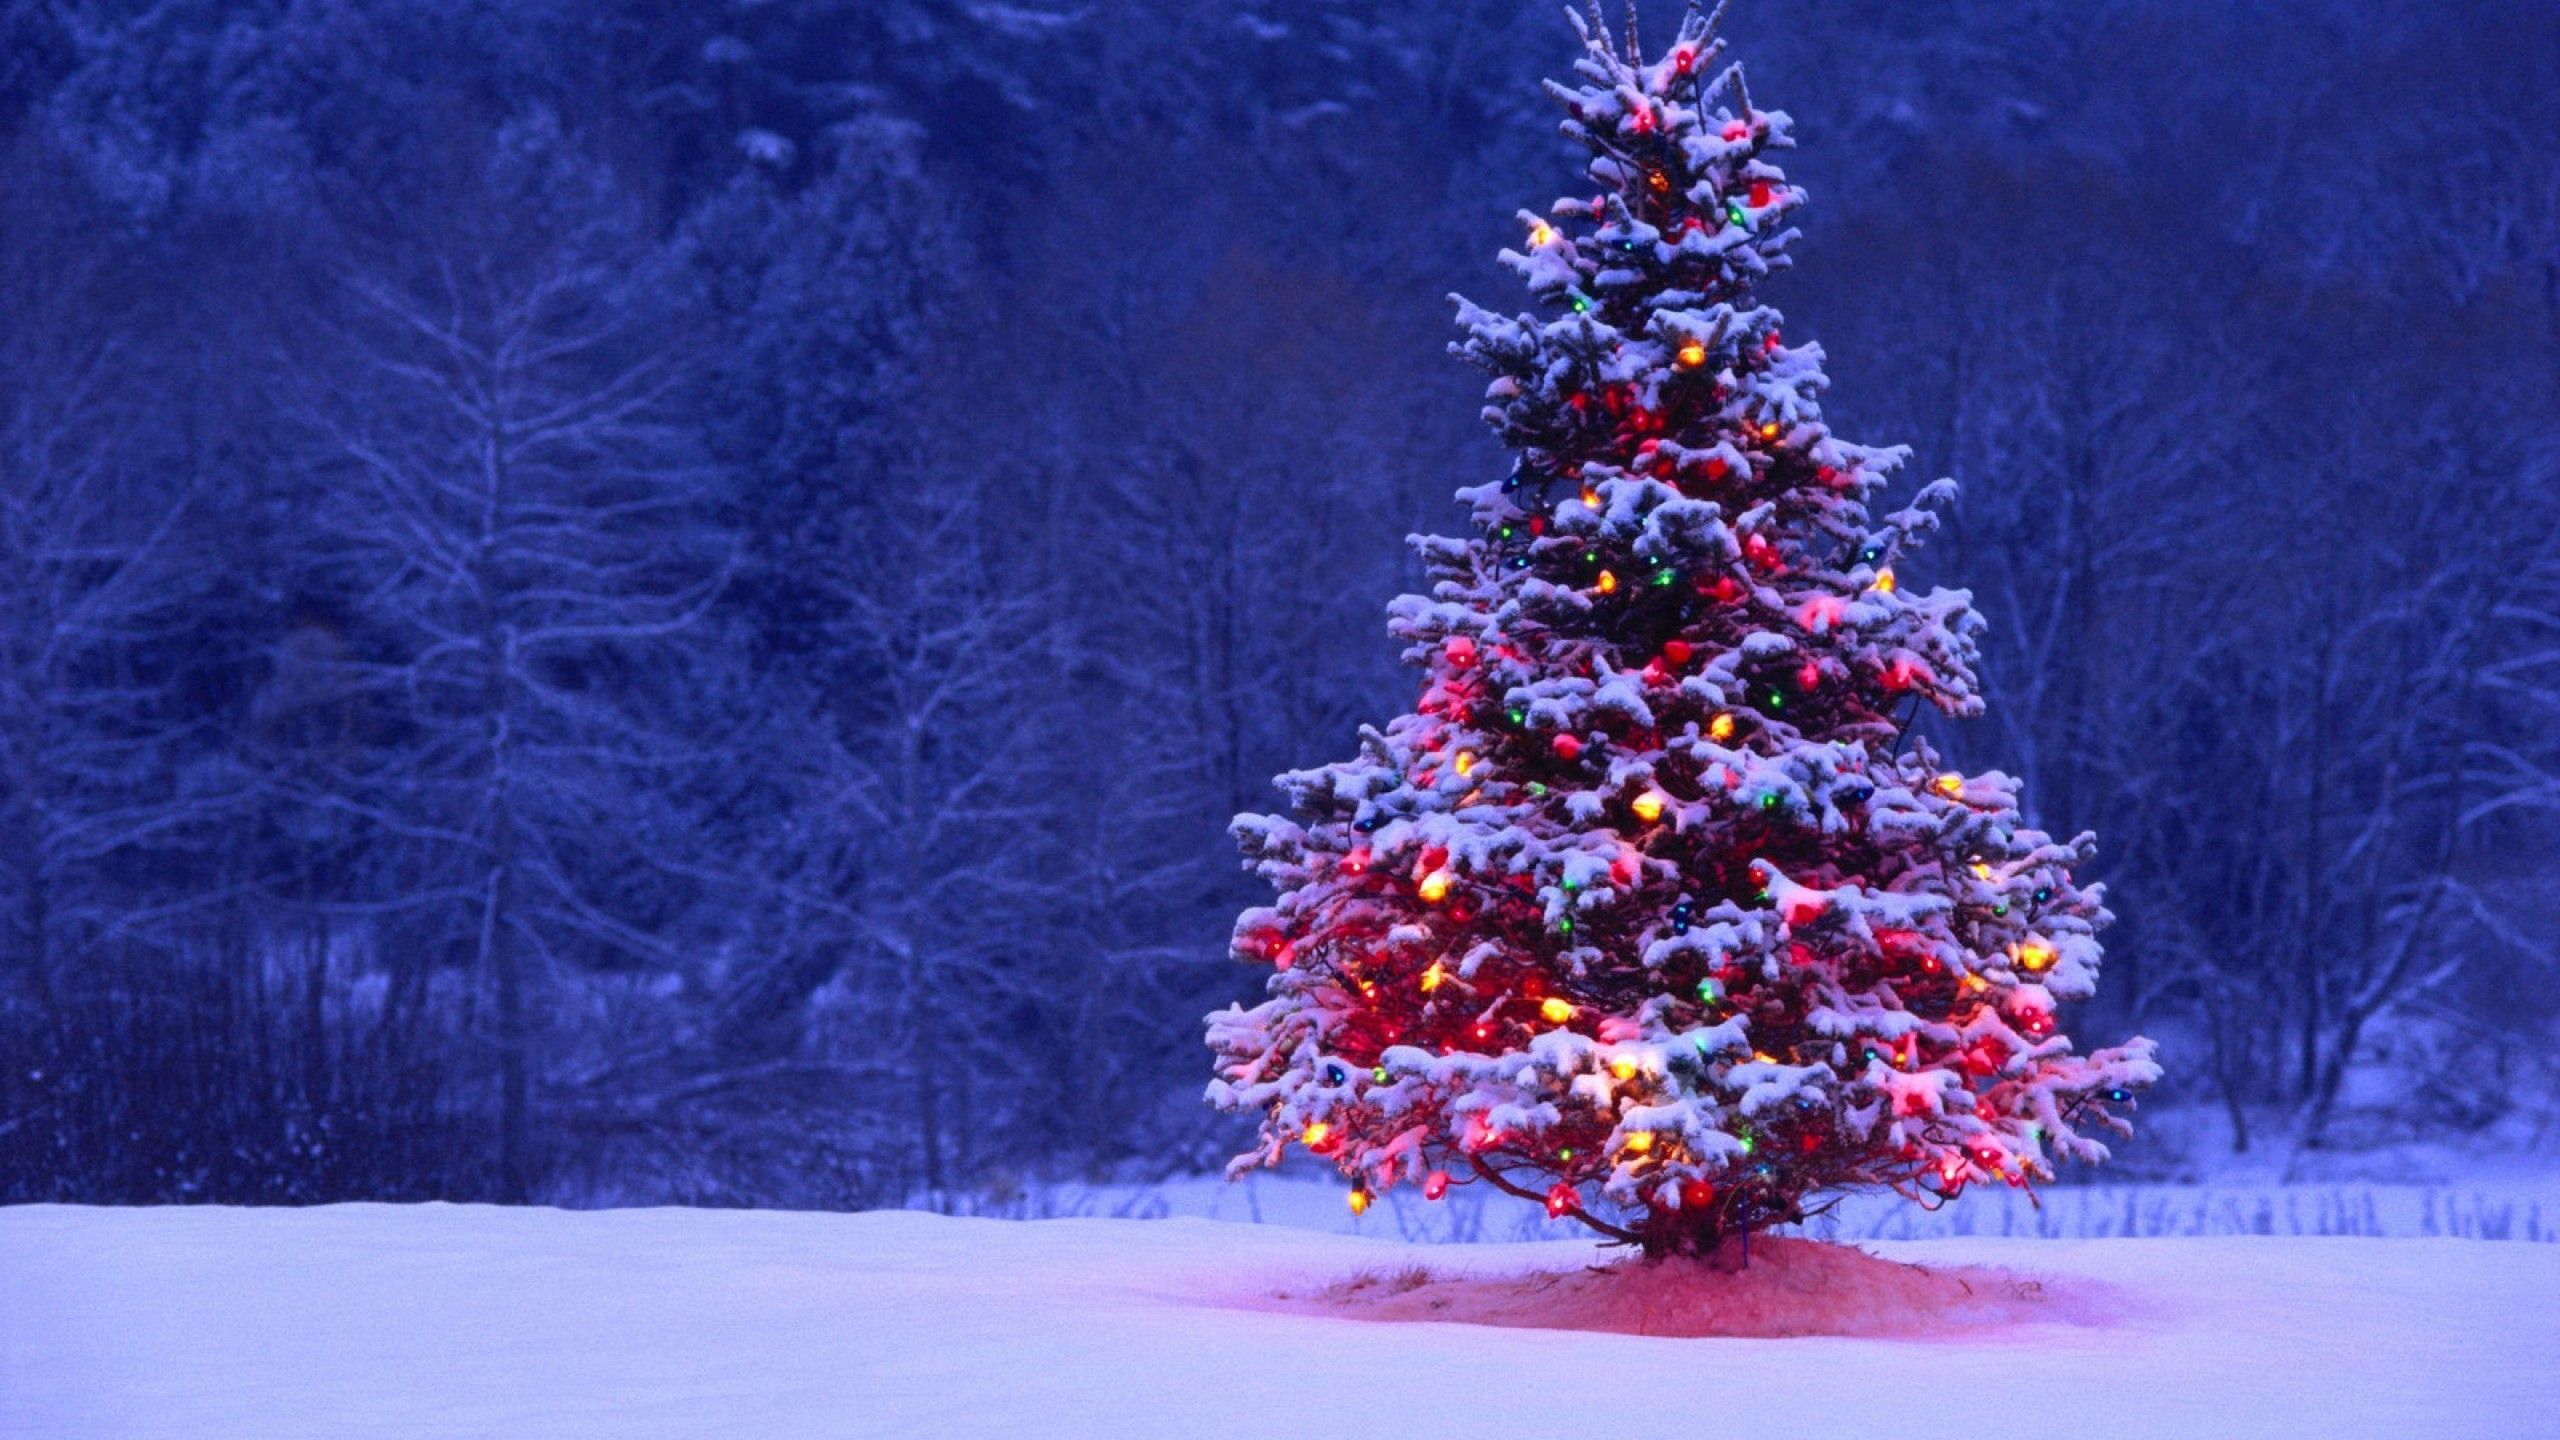 2560x1440 Retro ornaments and snow Cute Christmas desktop background. Christmas desktop, Christmas tree, Christmas wallpaper